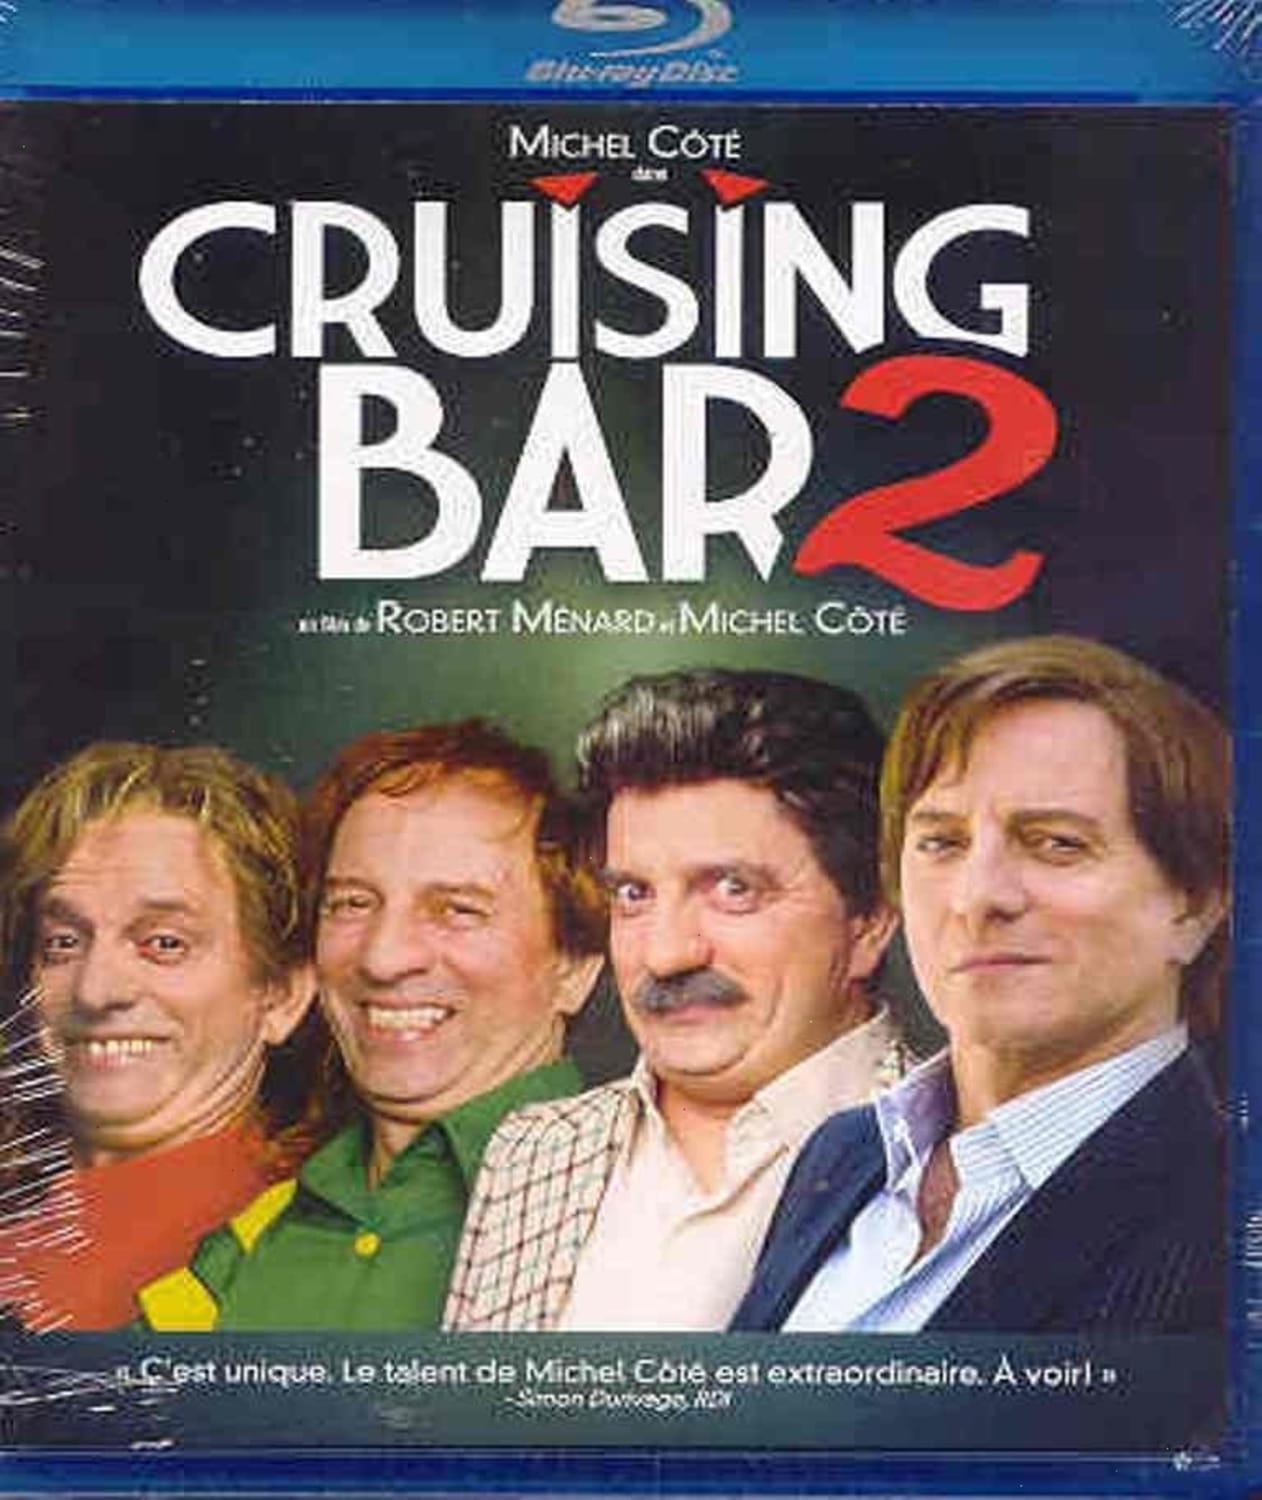 Cruising Bar 2 (Blu-ray) on MovieShack